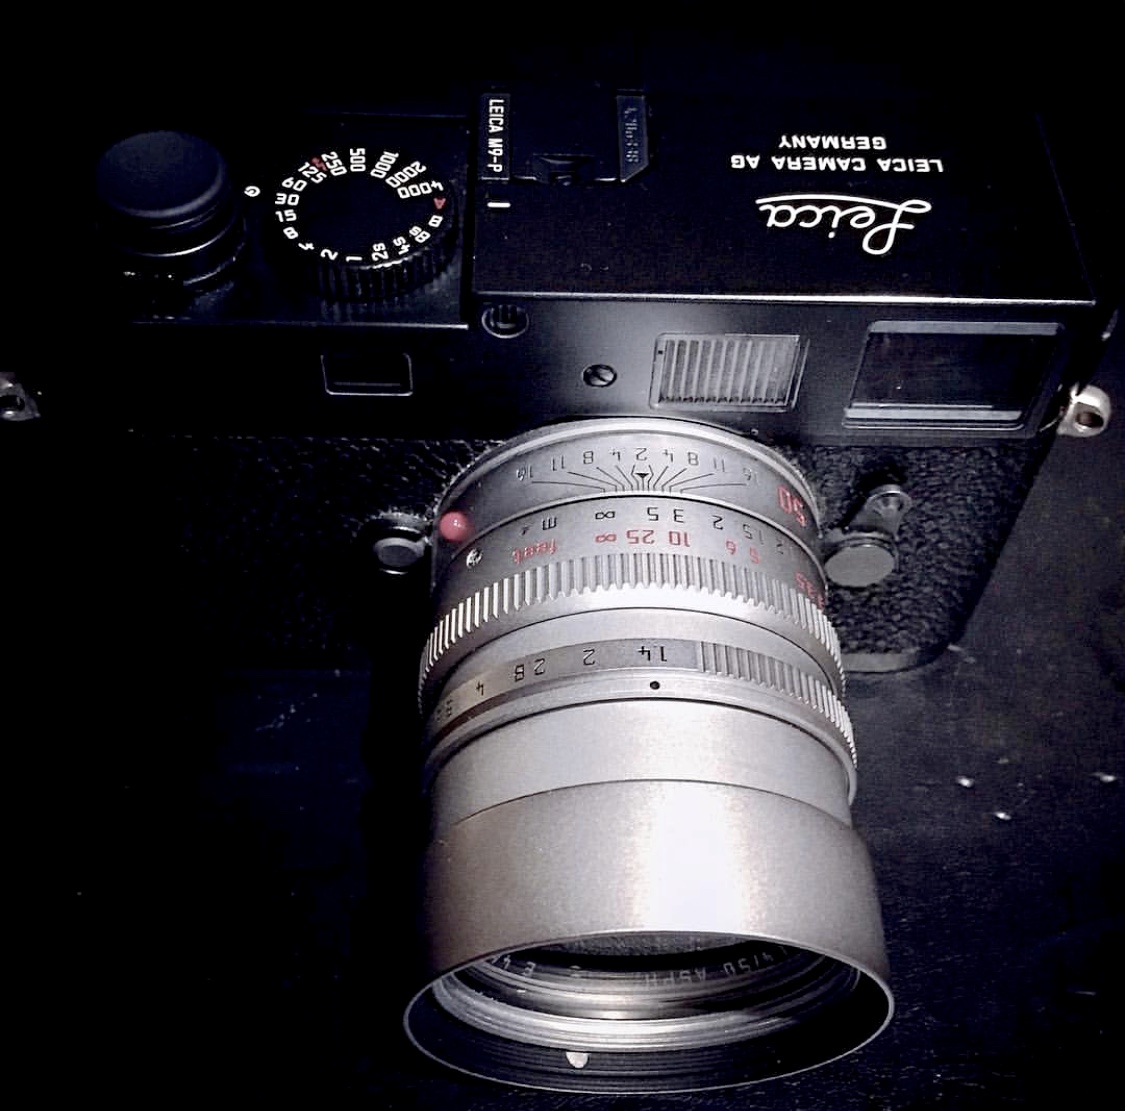 Leica 50mm F1.4 Summilux ASPH M Lens — LEICA MOMENT REVIEW